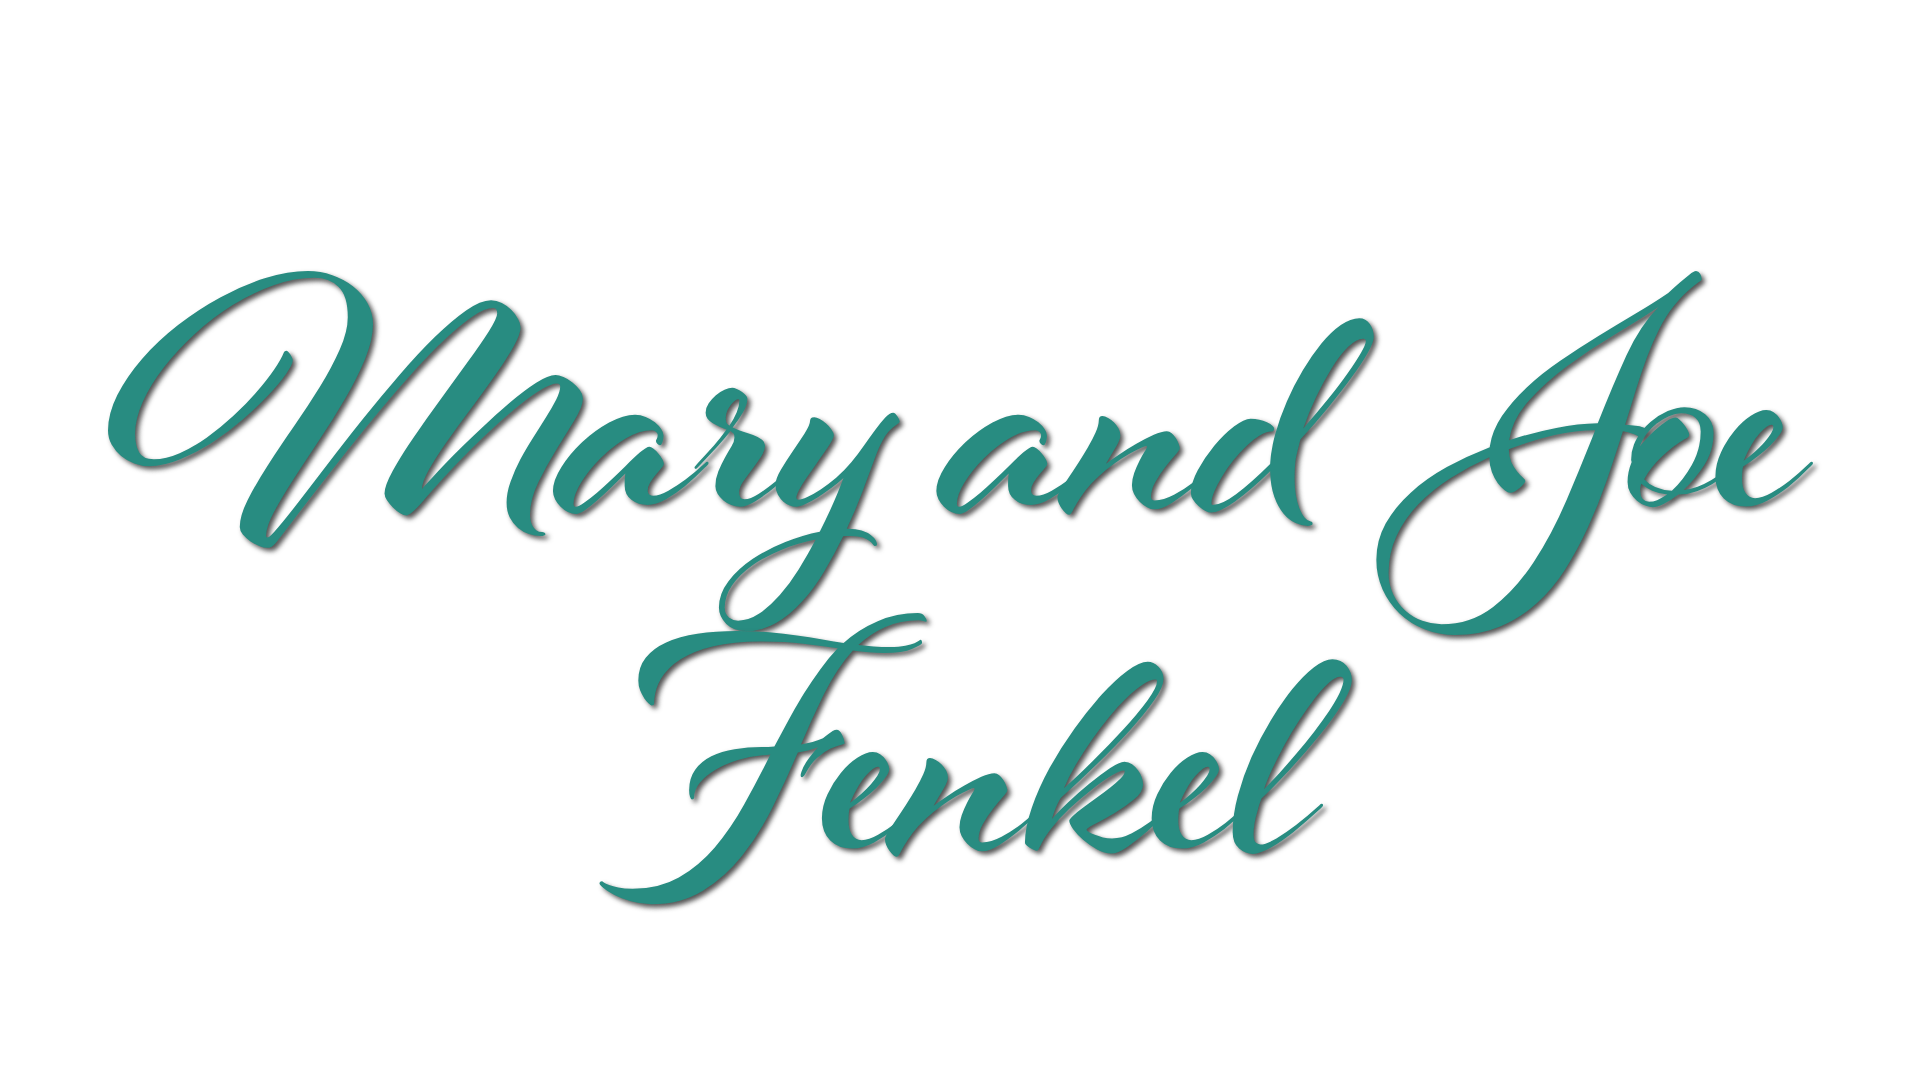 Defender of Youth - Mary and Joe Fenkel